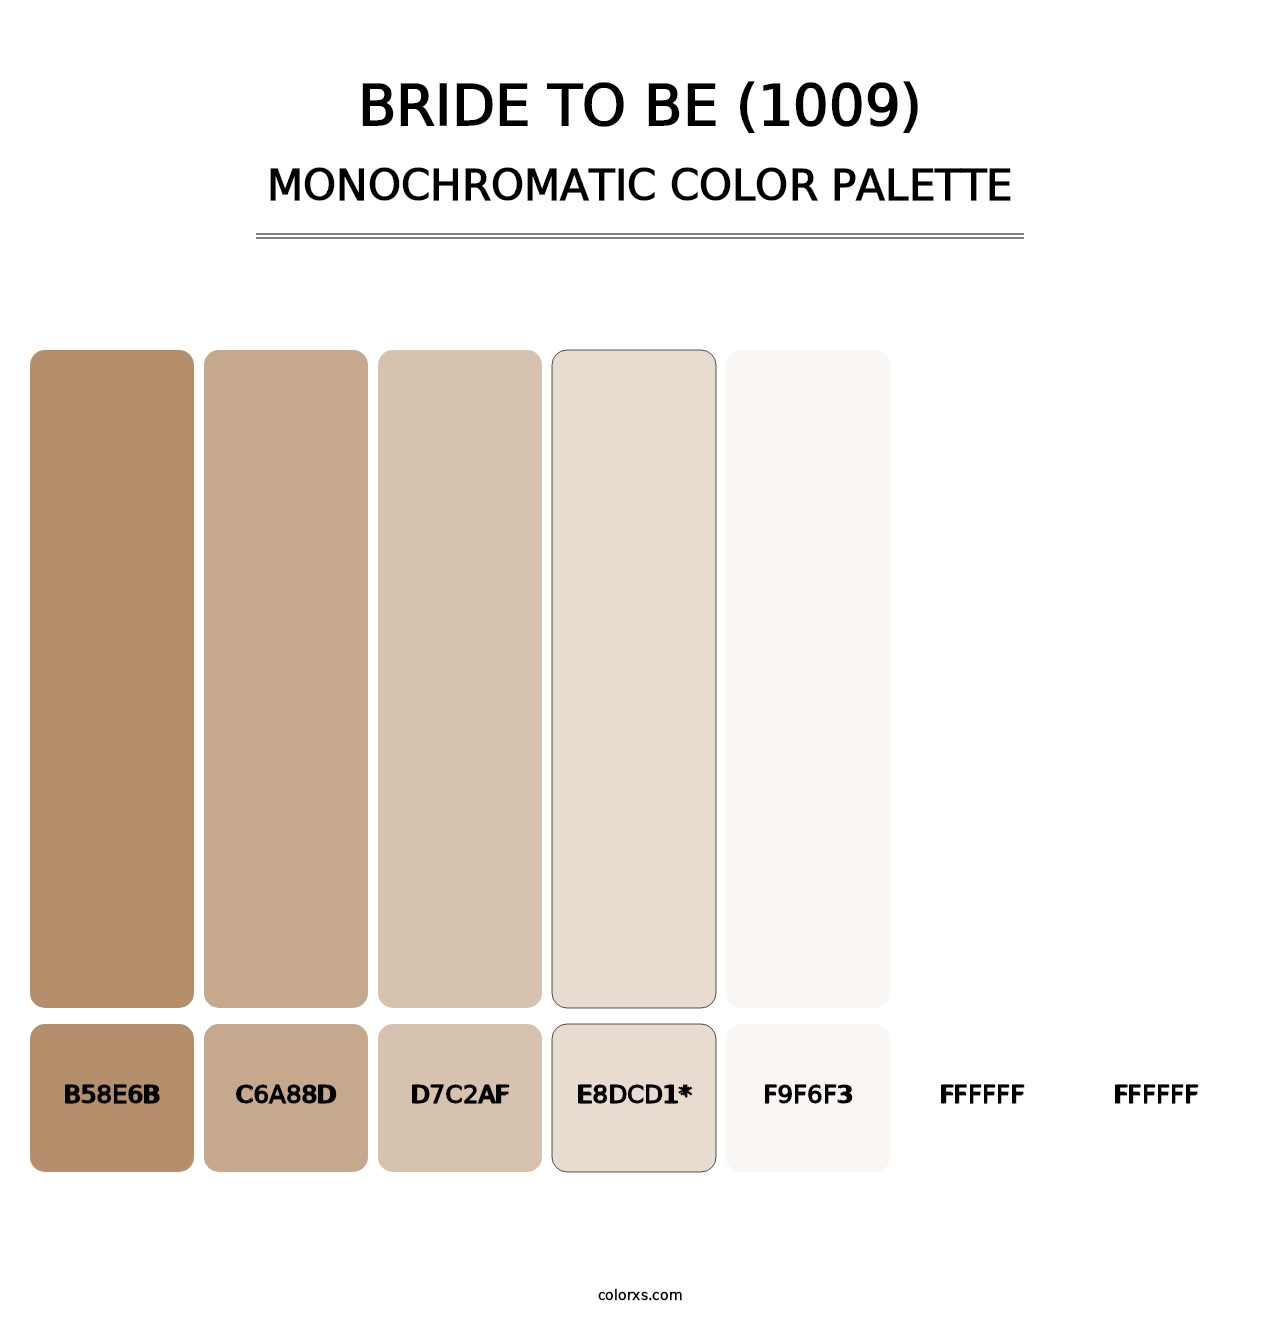 Bride To Be (1009) - Monochromatic Color Palette